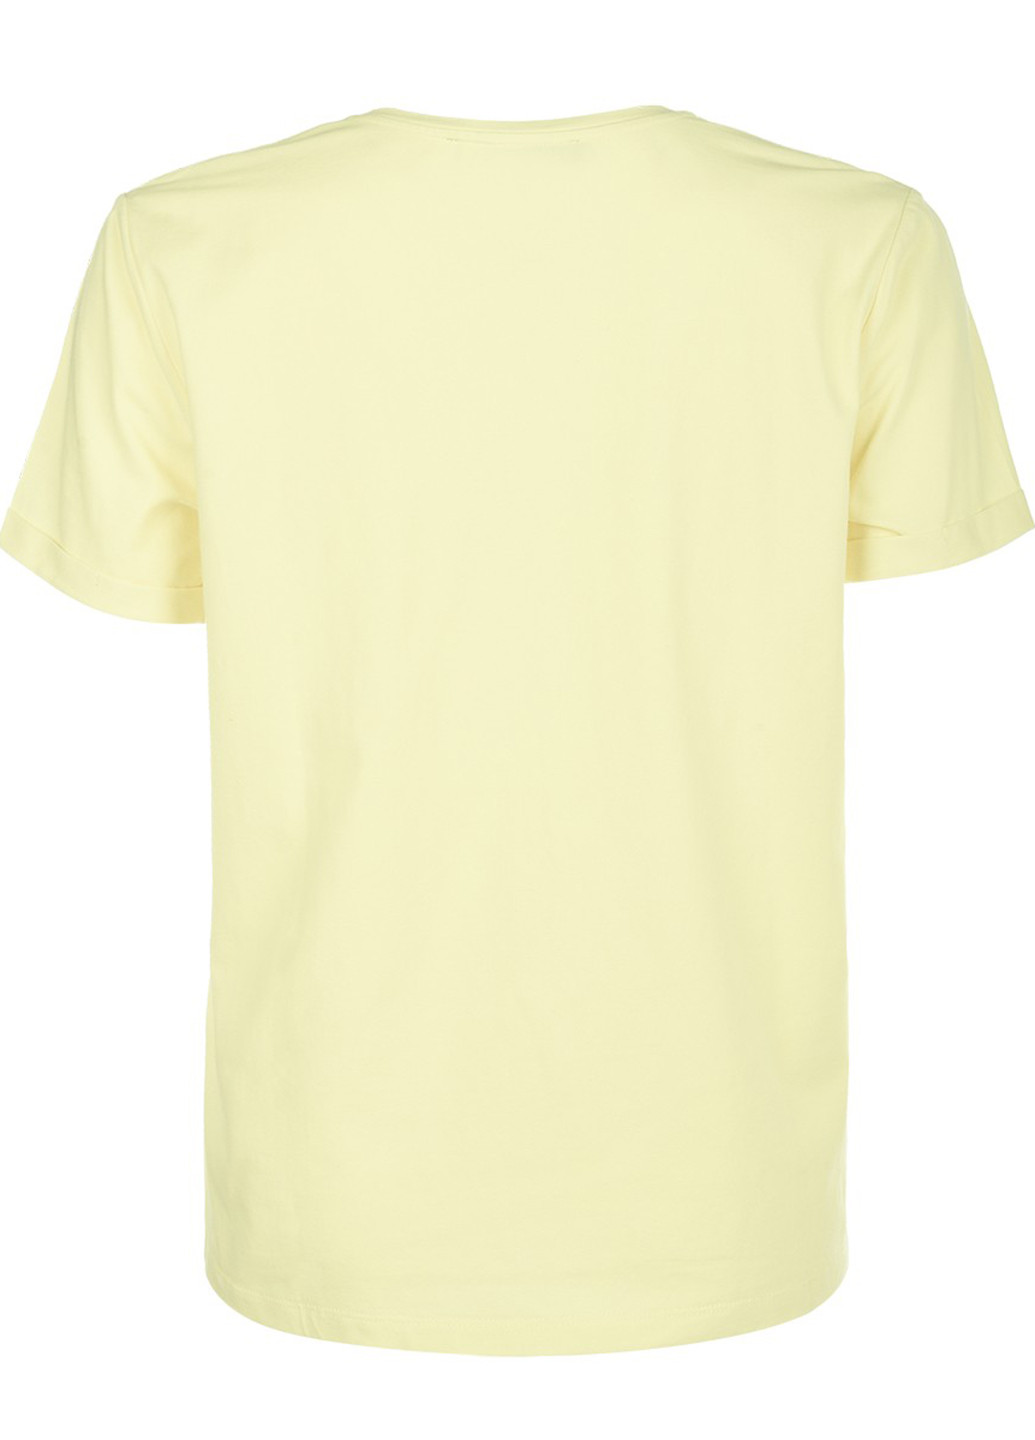 Желтая летняя футболка LOVE REPUBLIC